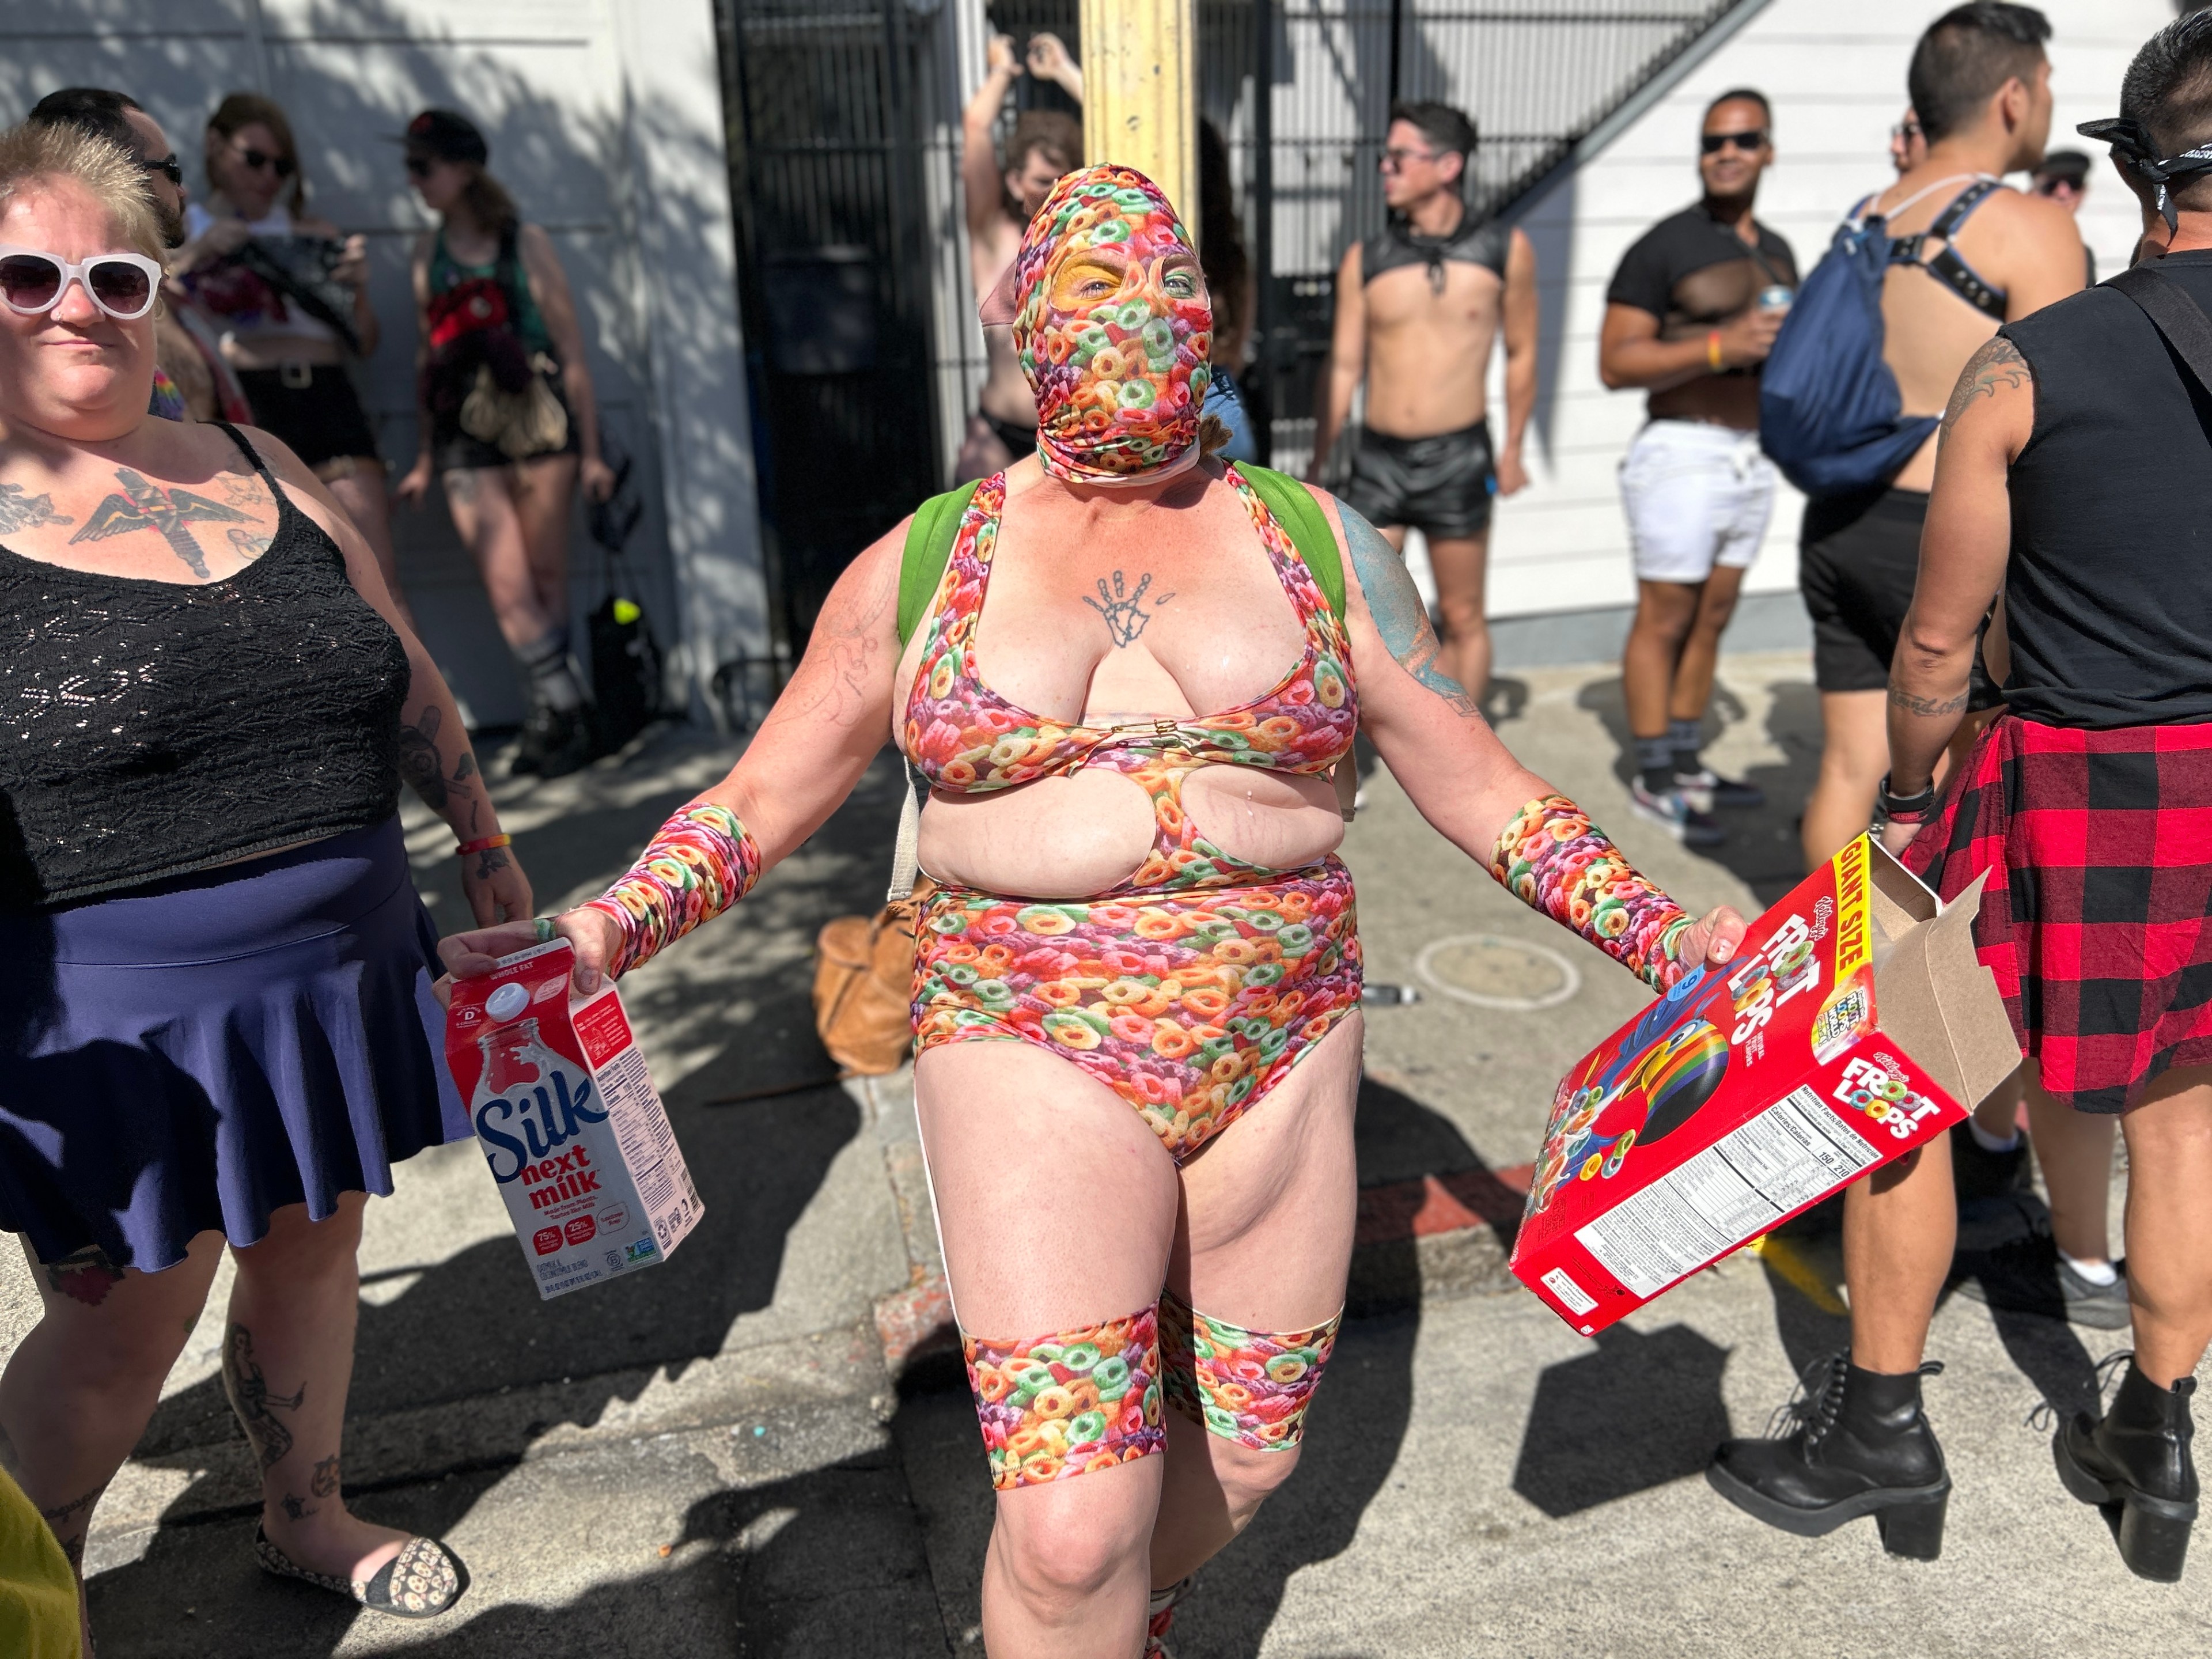 Photos: Up Your Alley Street Fair Brings Kinky Sex to San Francisco